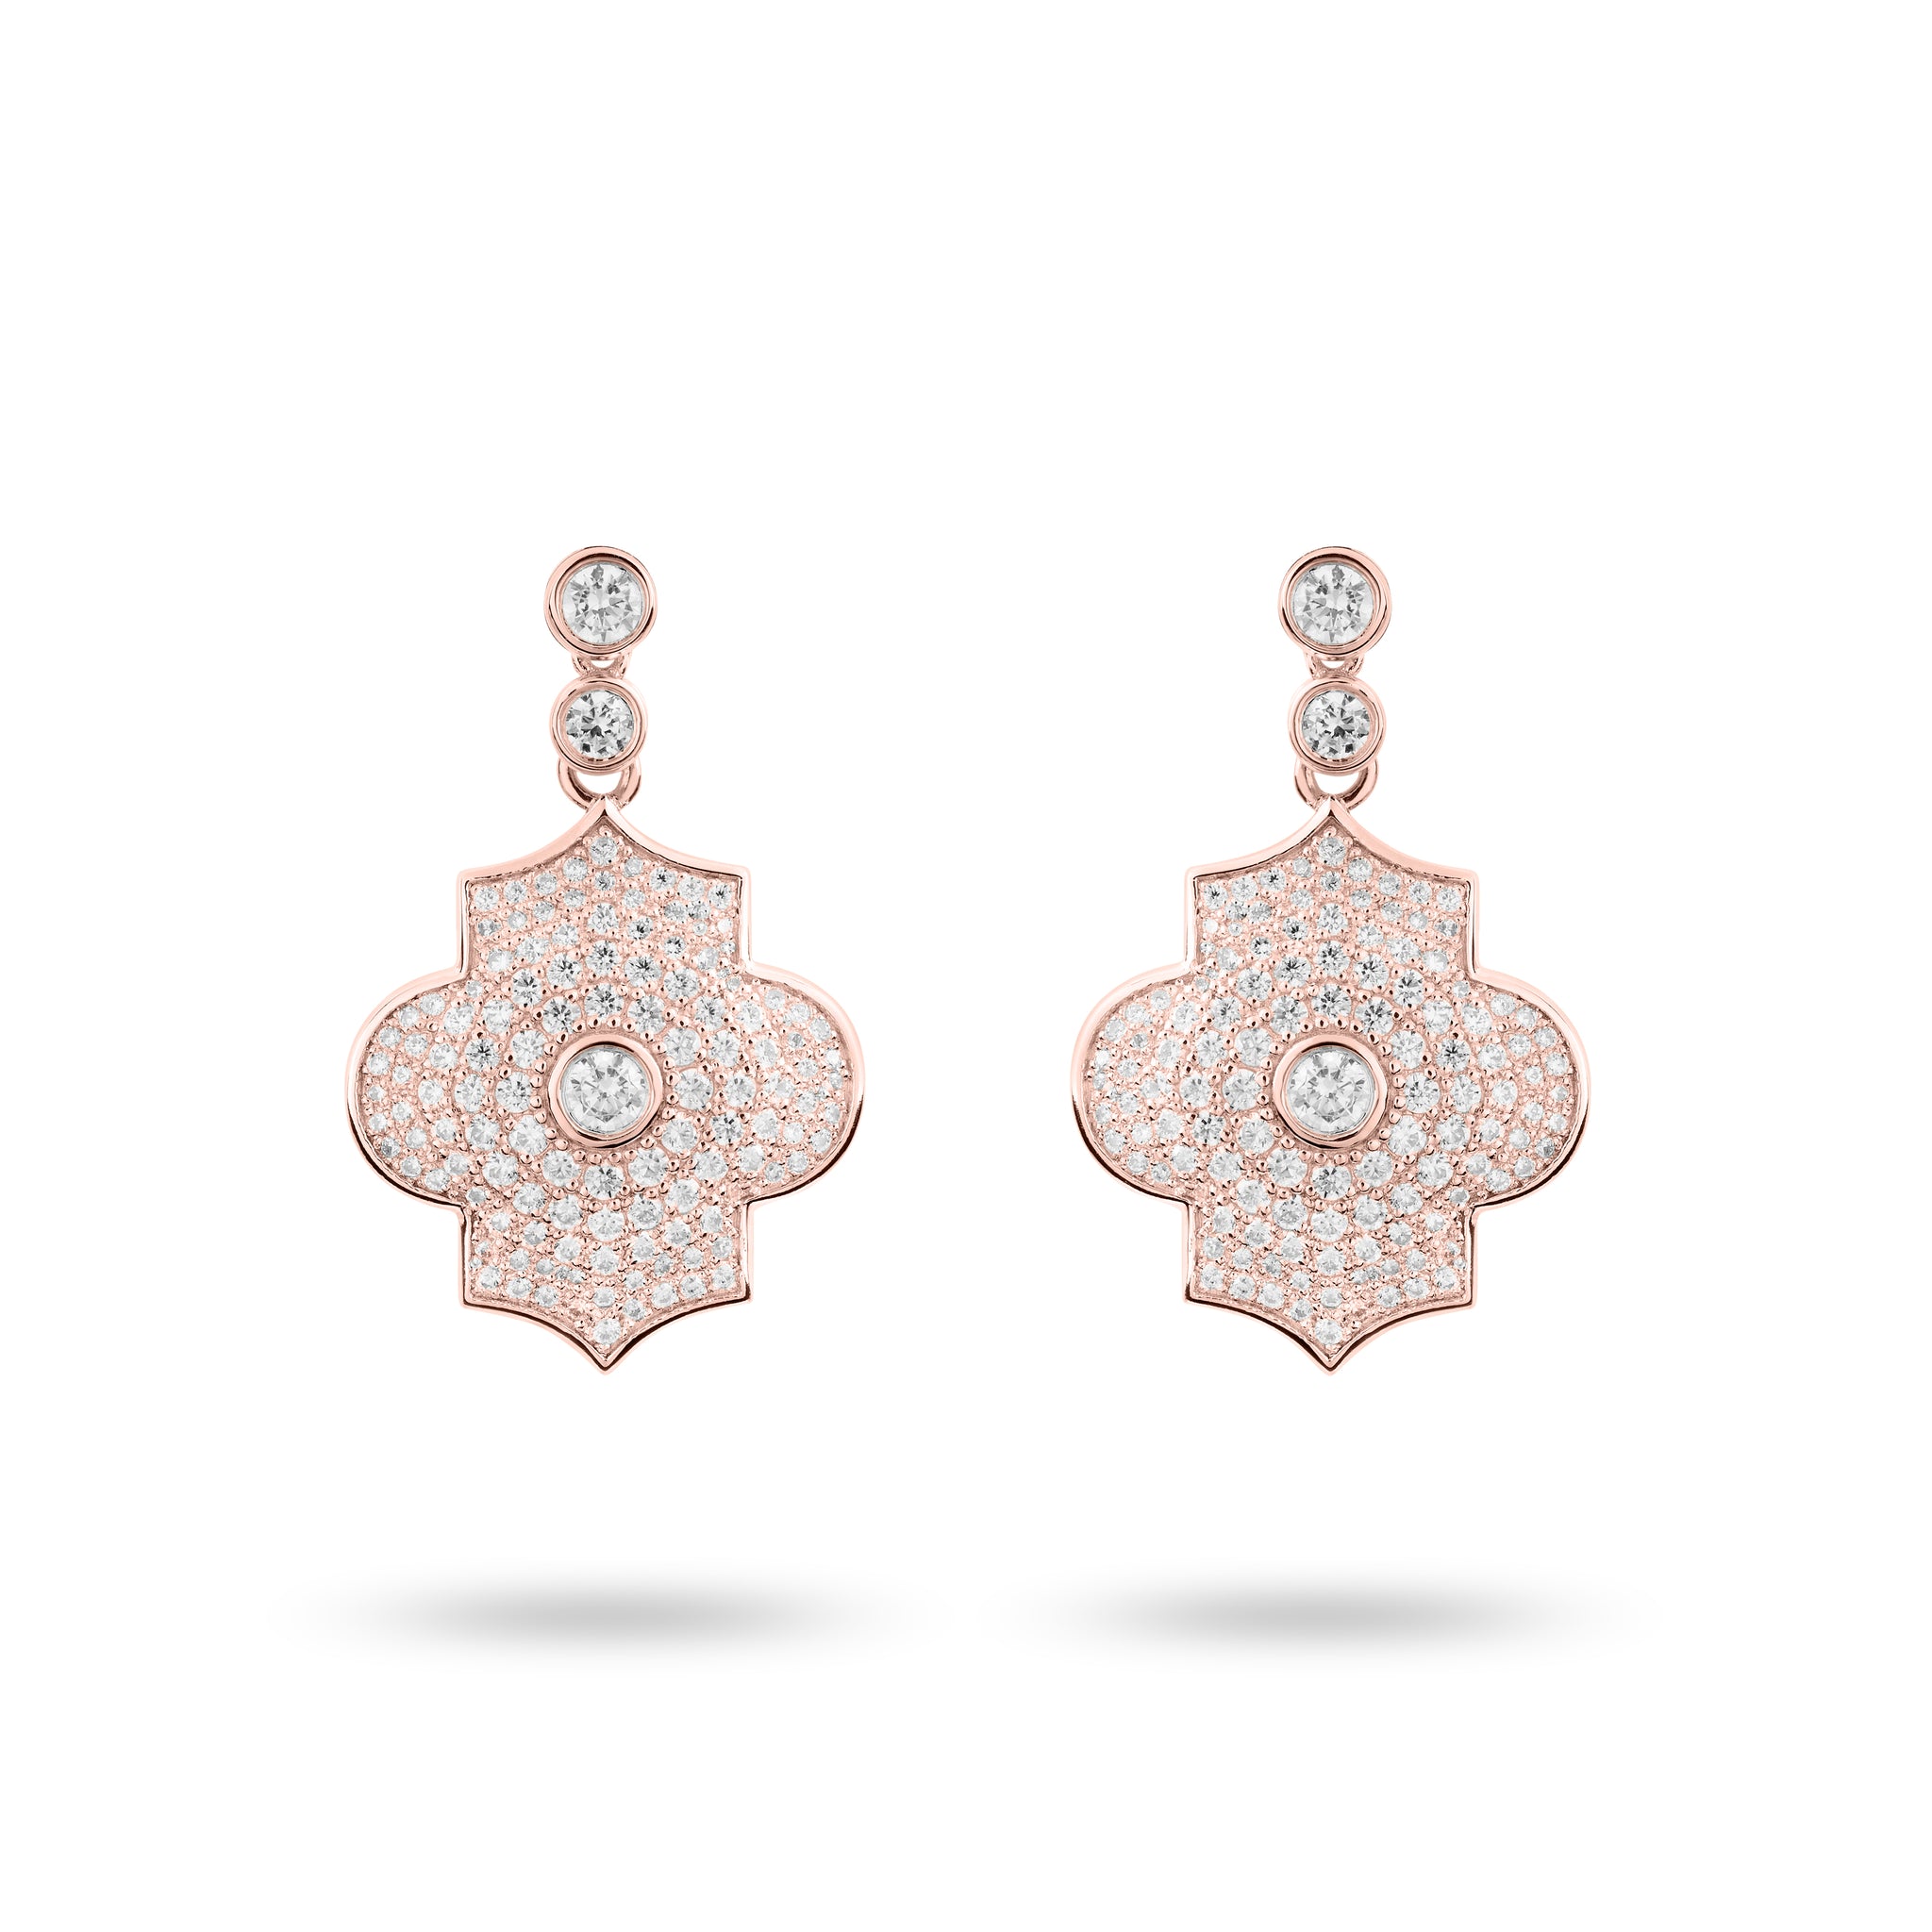 Regal Power- Rose gold pave earrings - Ksenia Mirella Jewellery 